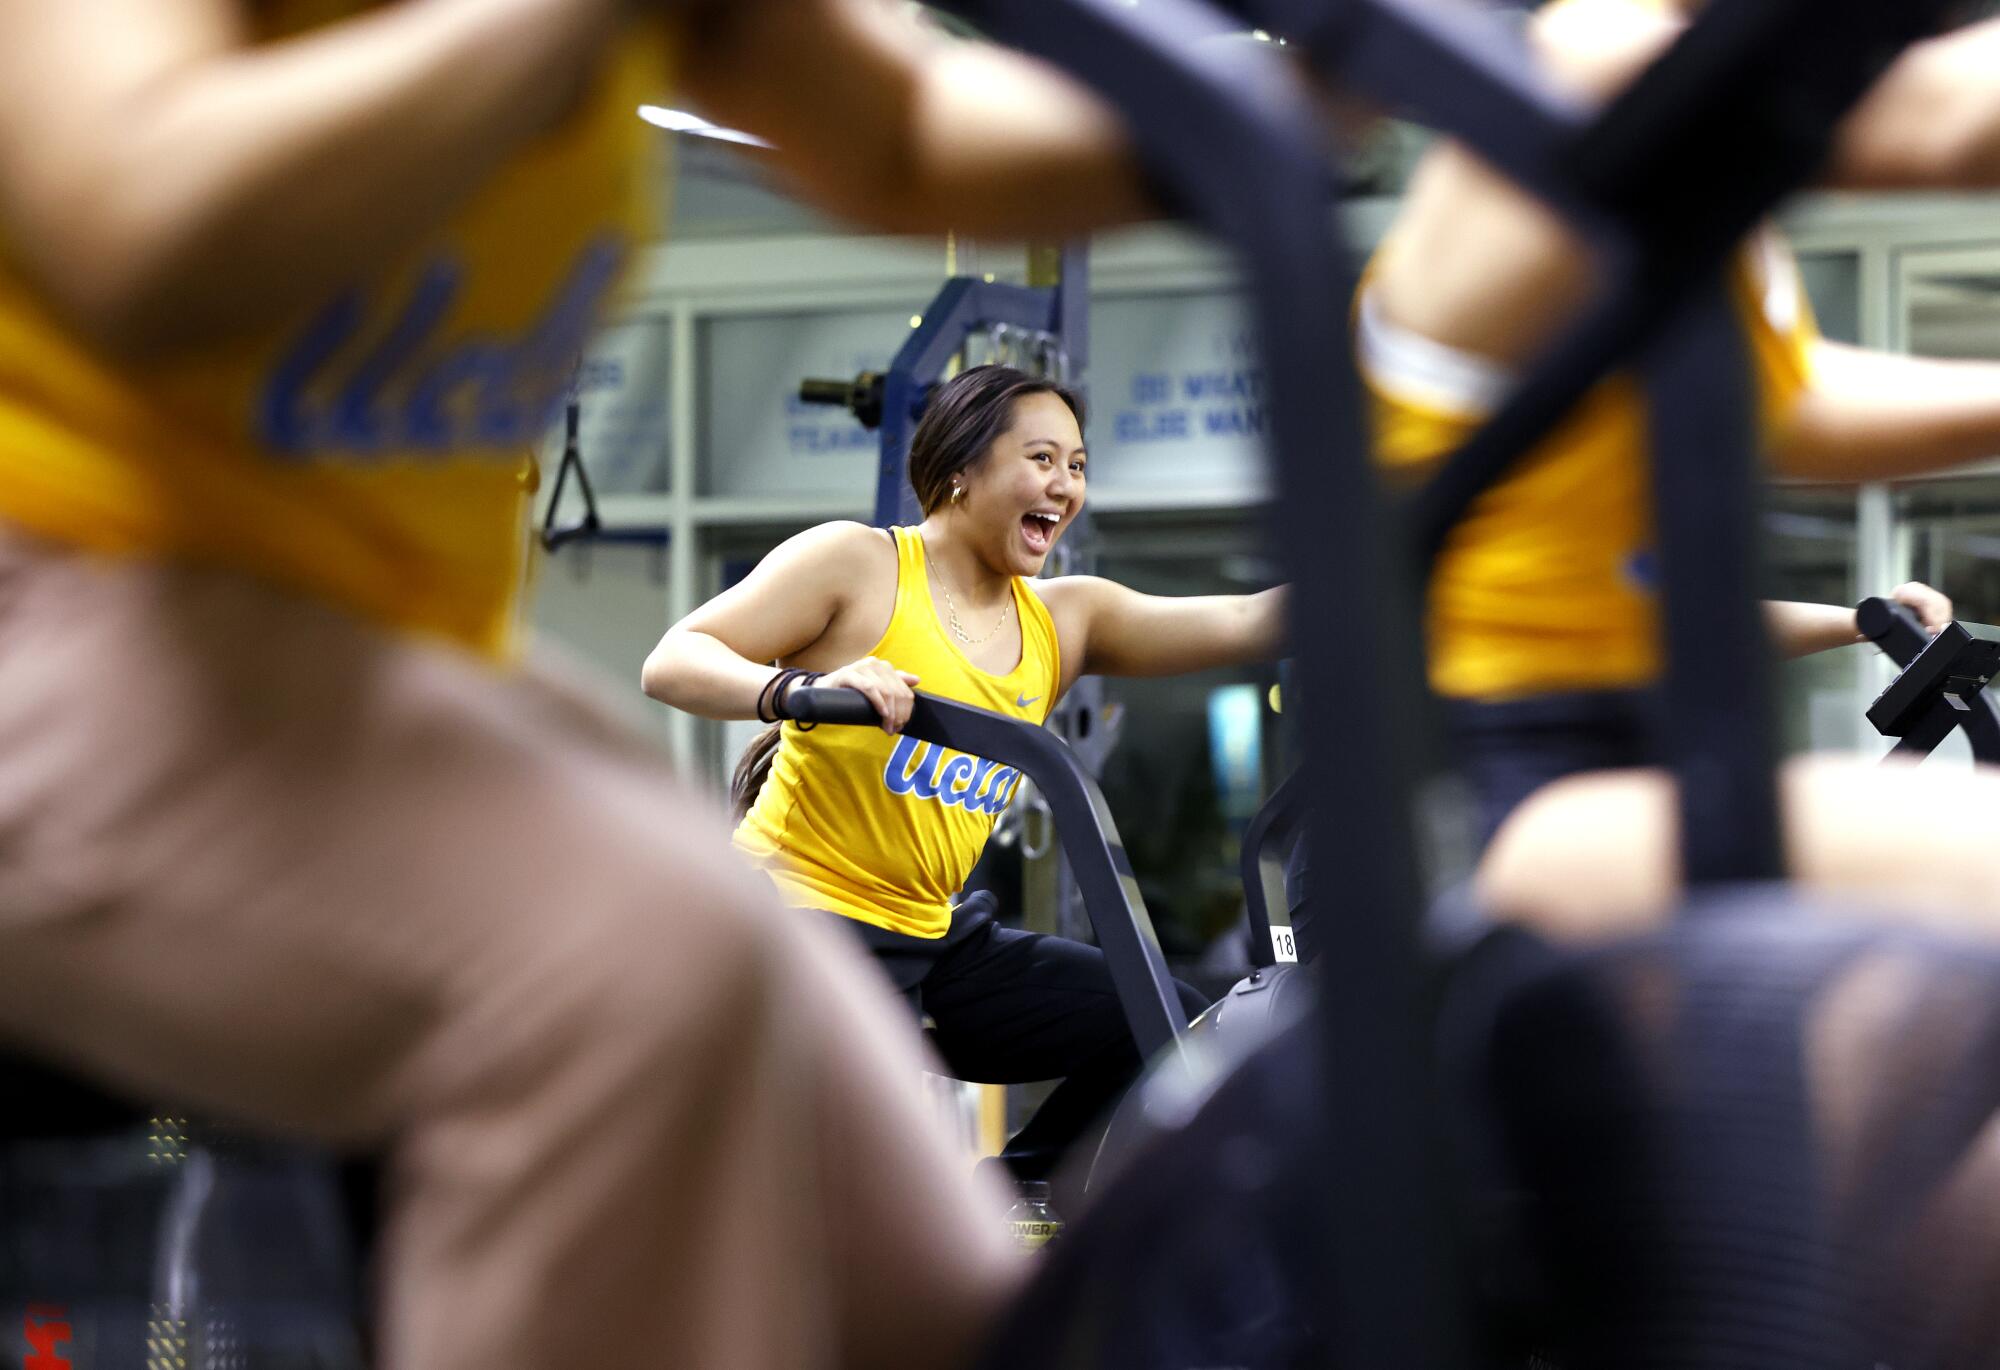 Emma Malabuyo laughs while riding an exercise bike alongside teammates.